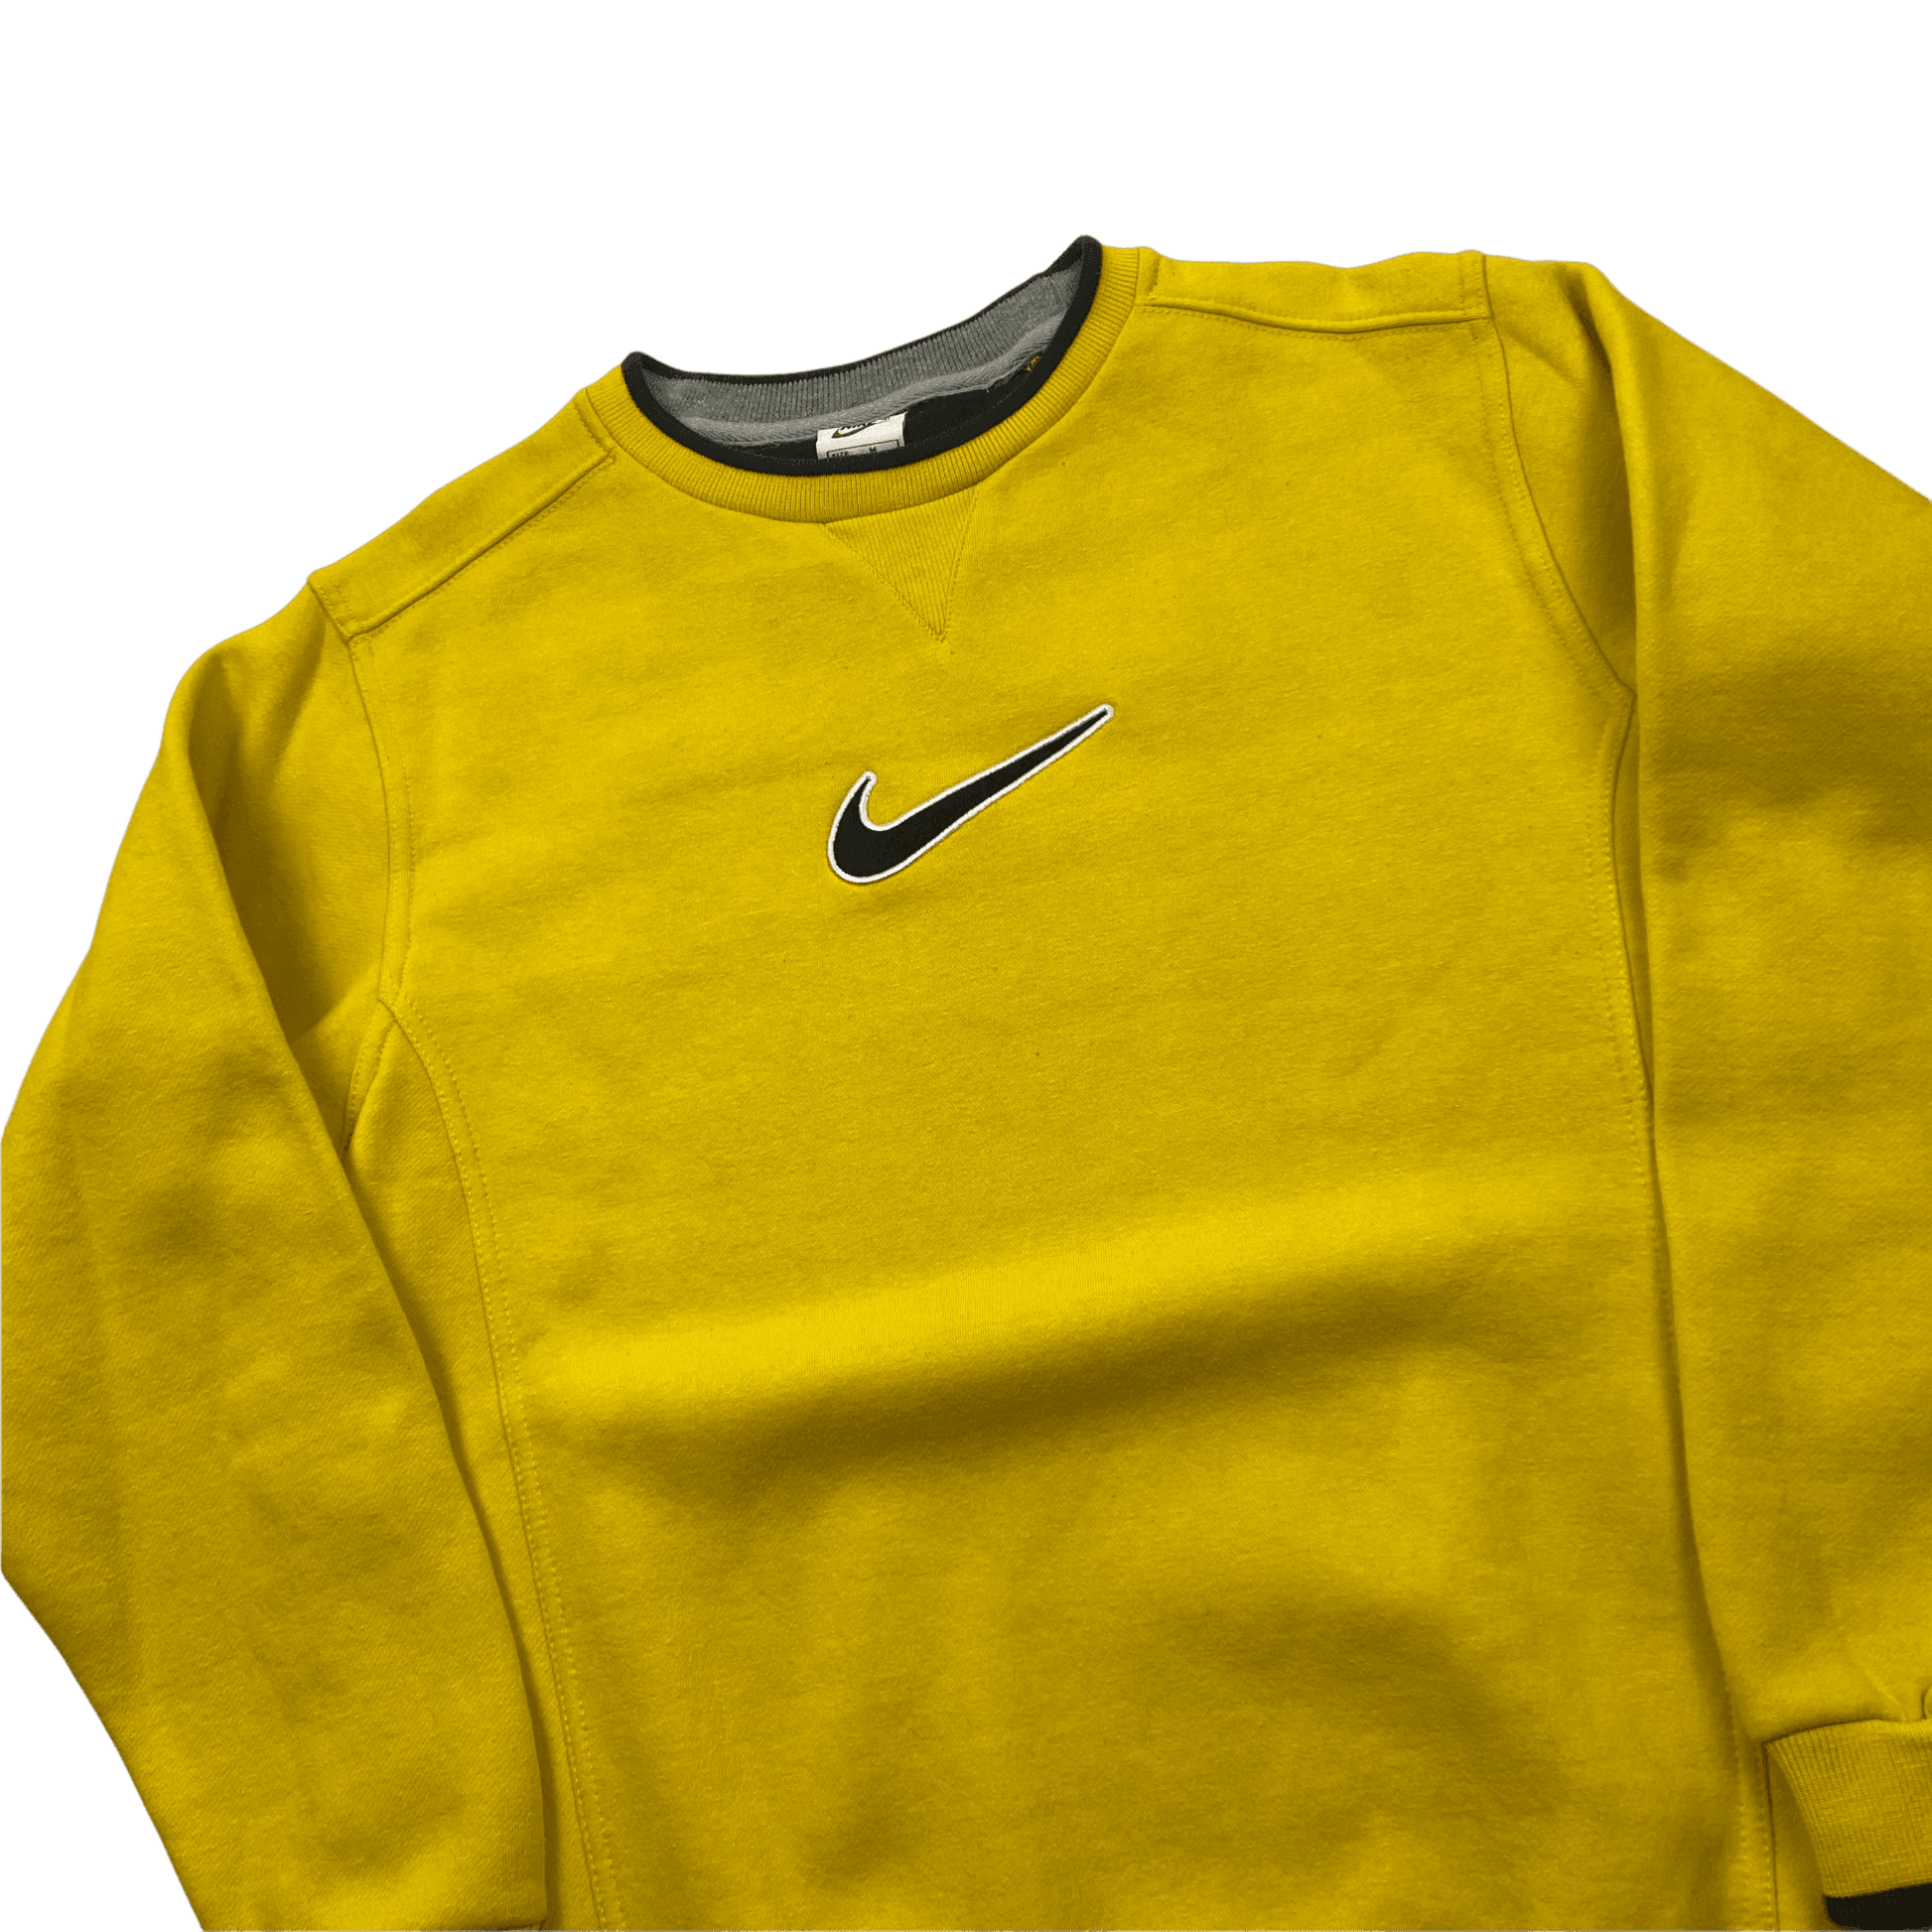 Vintage 90s Yellow Nike Large Centre Swoosh Sweatshirt - Medium - The Streetwear Studio